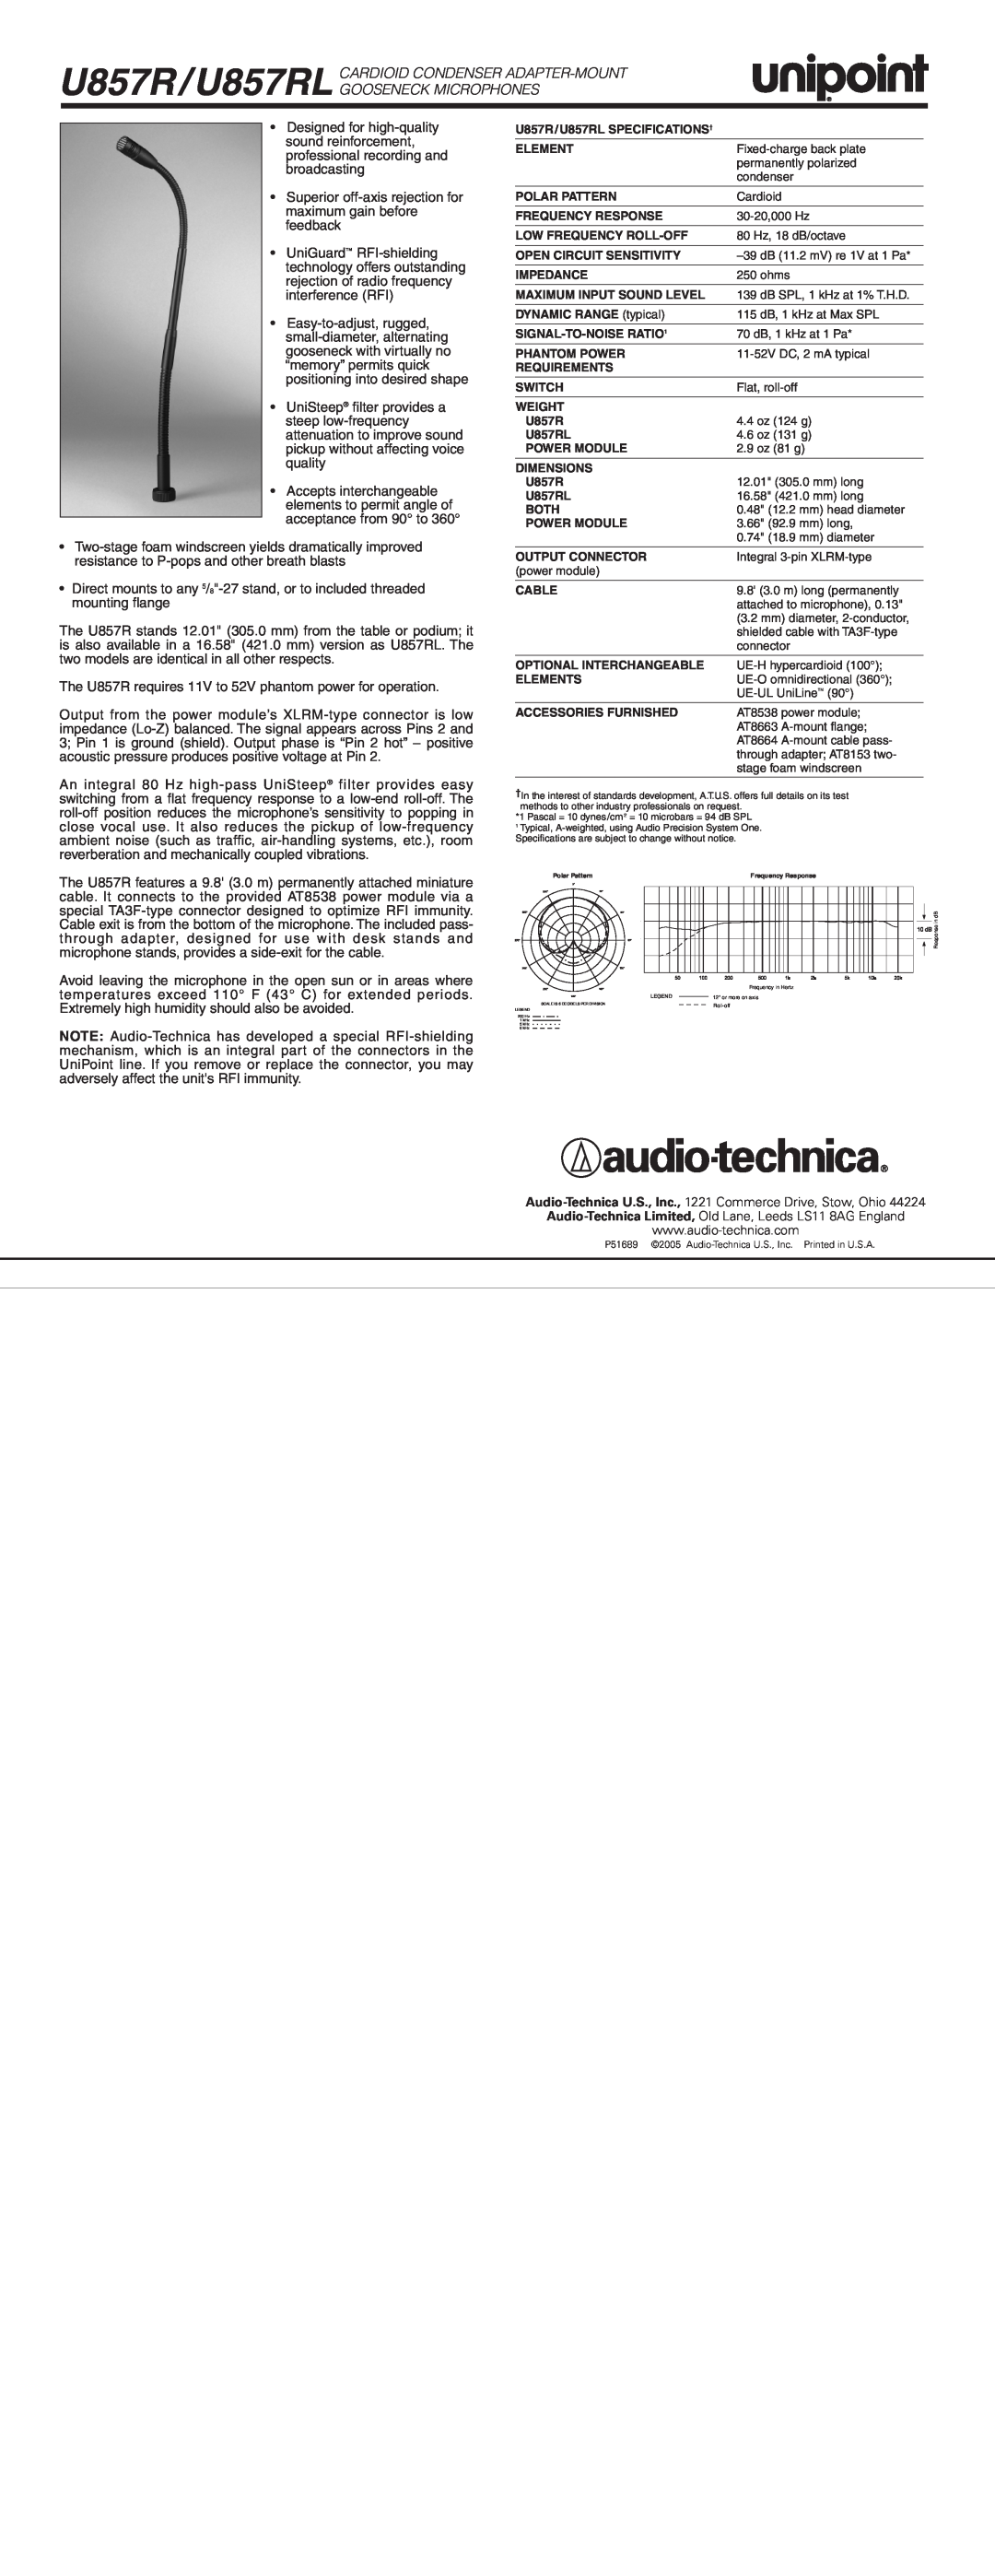 Audio-Technica U857RL specifications 